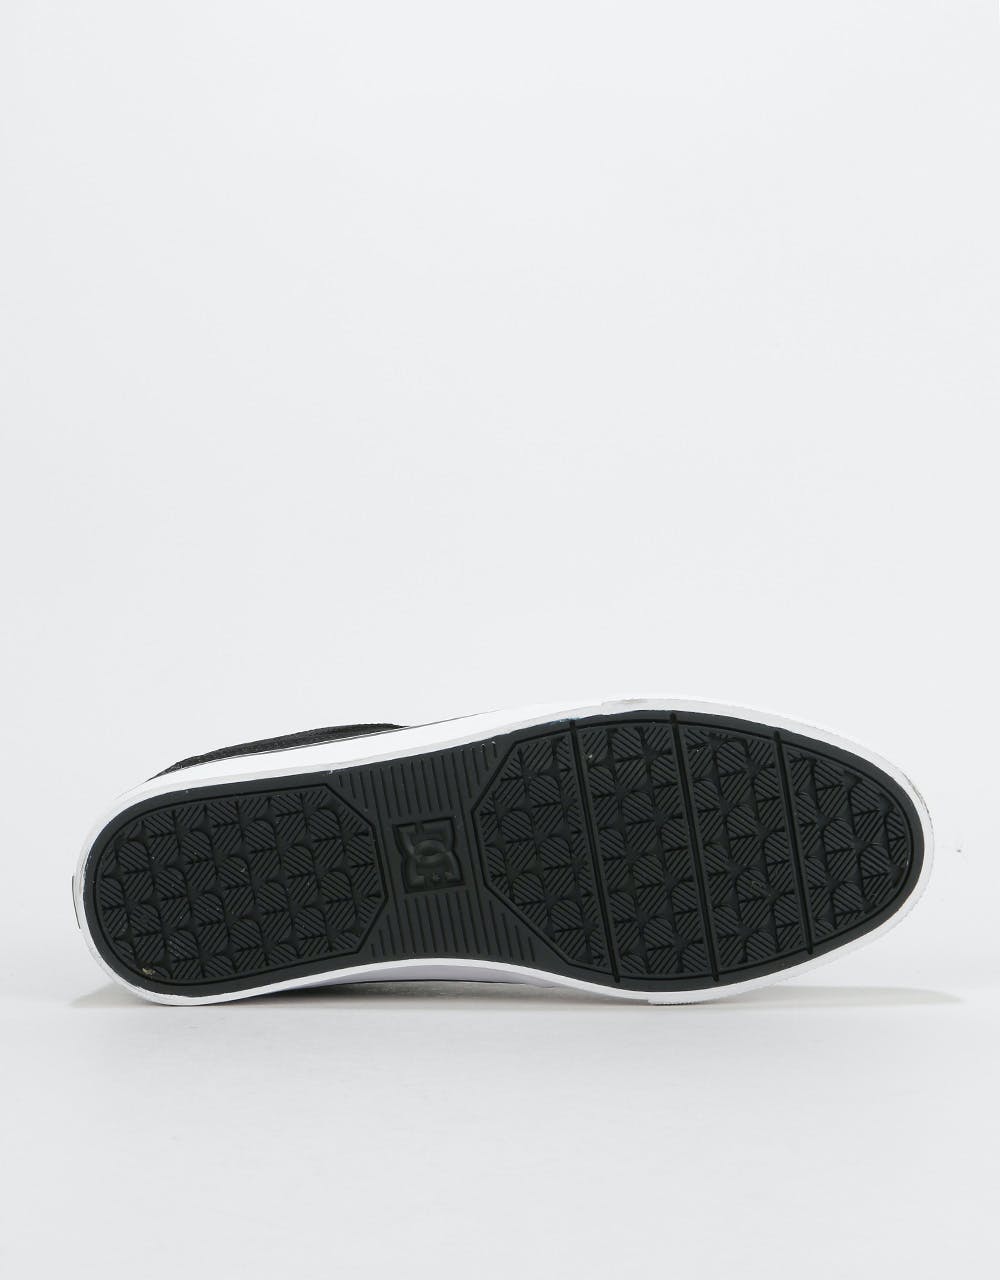 DC Heathrow Vulc Skate Shoes - Black/White